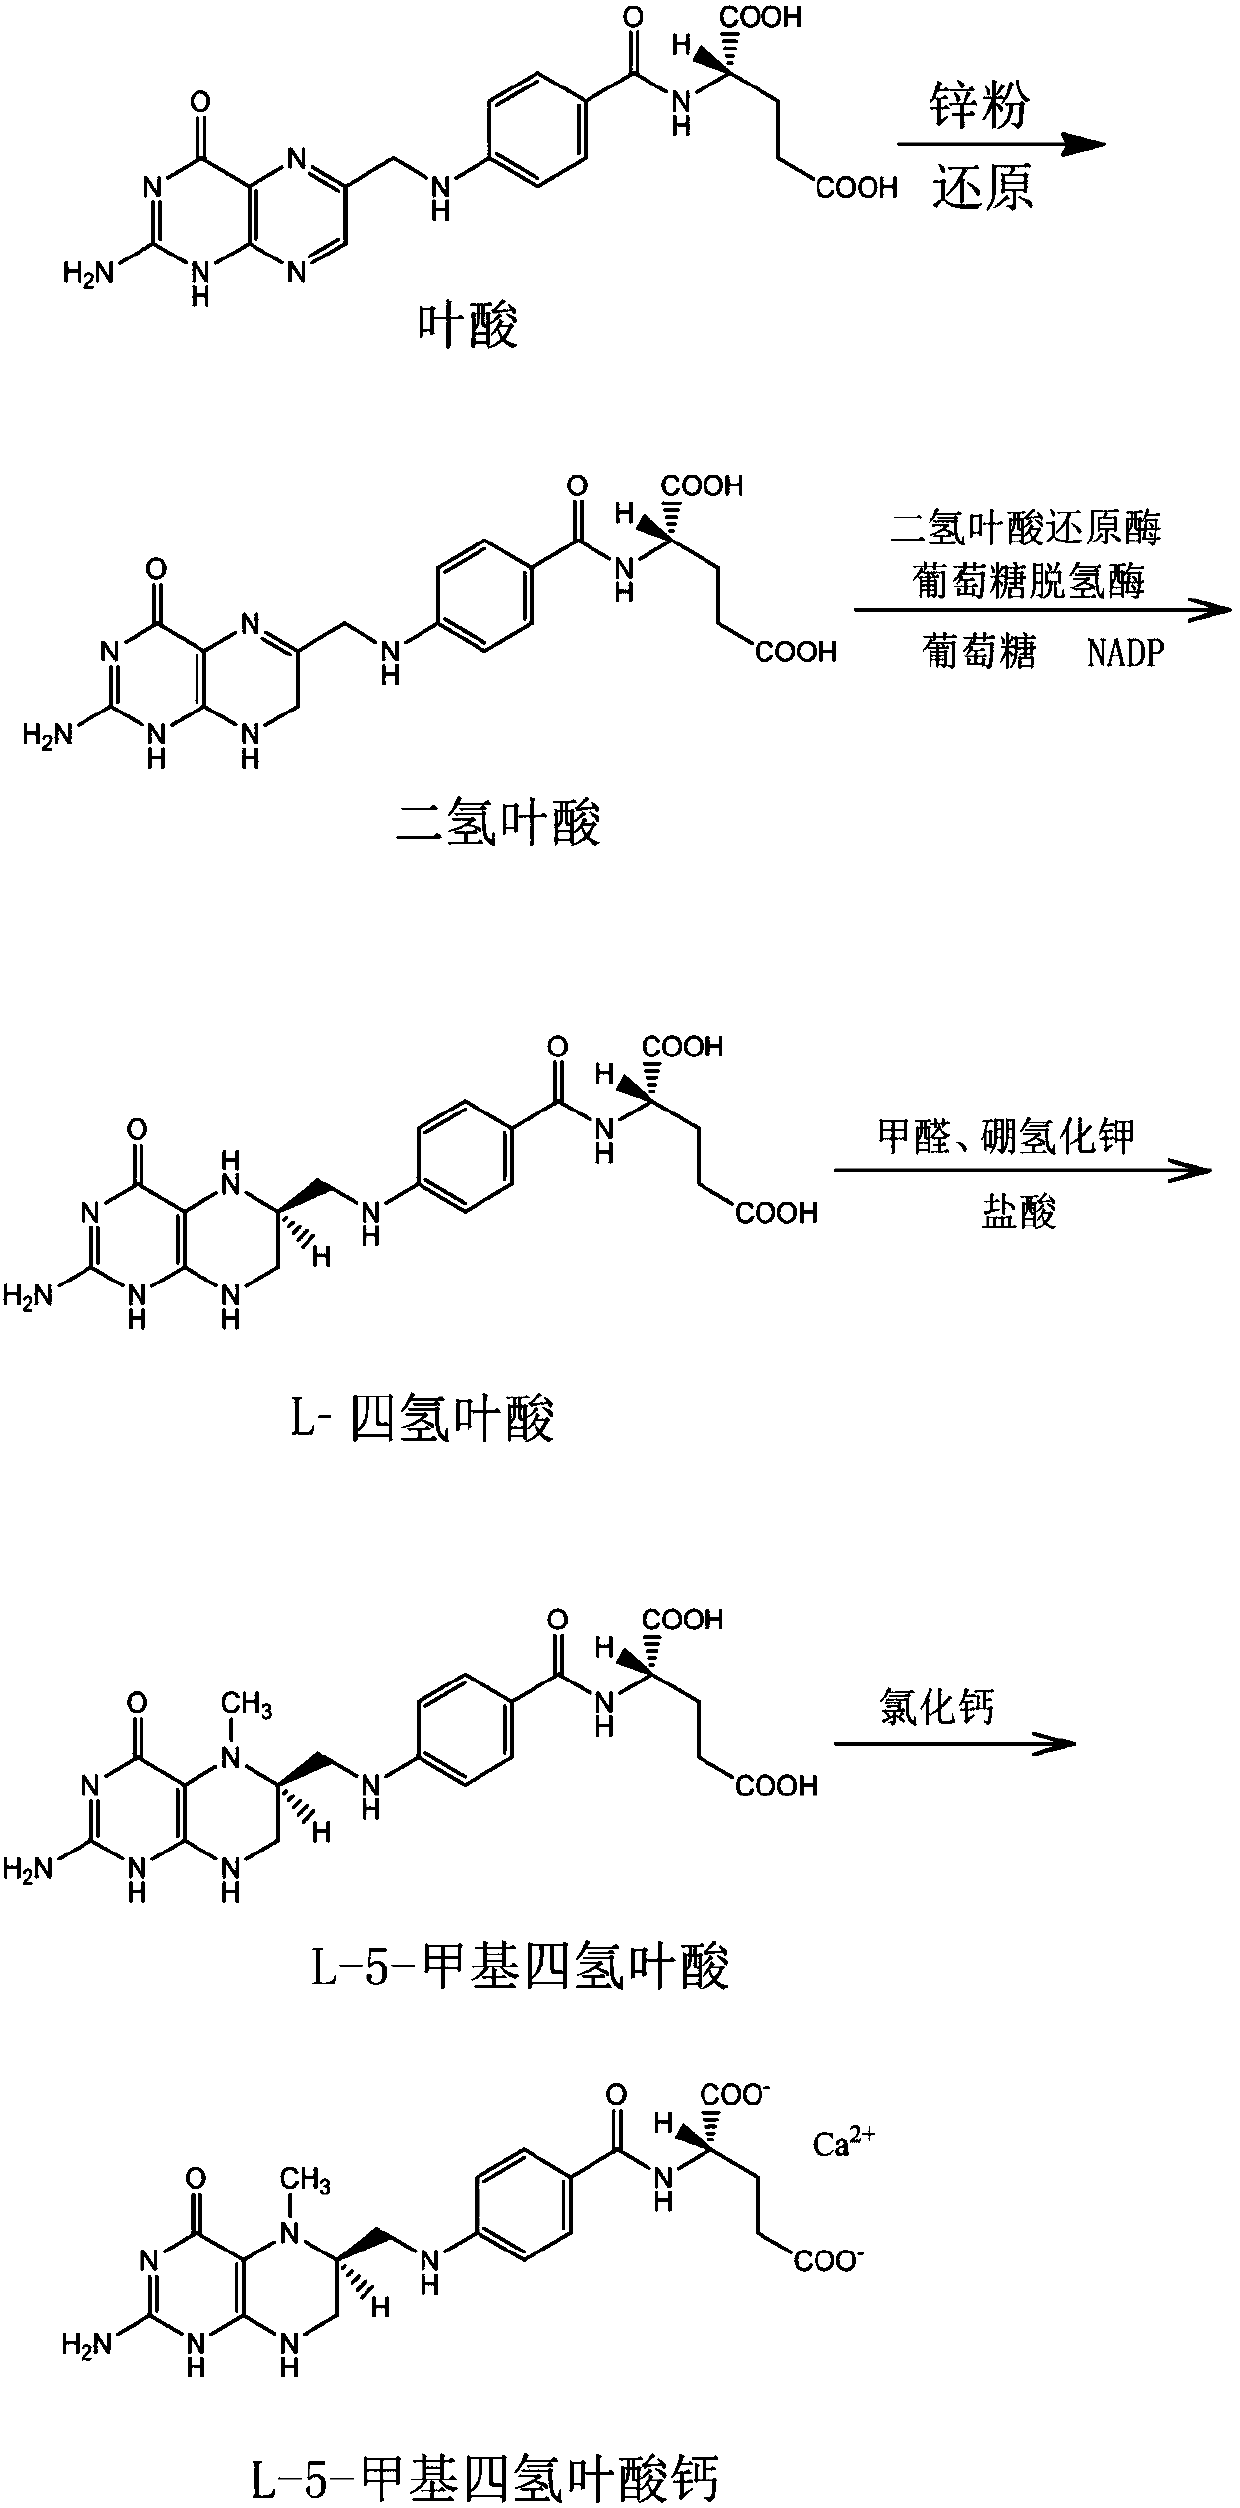 Method for preparing L-5-calcium methyl tetrahydrofolate through enzymic method